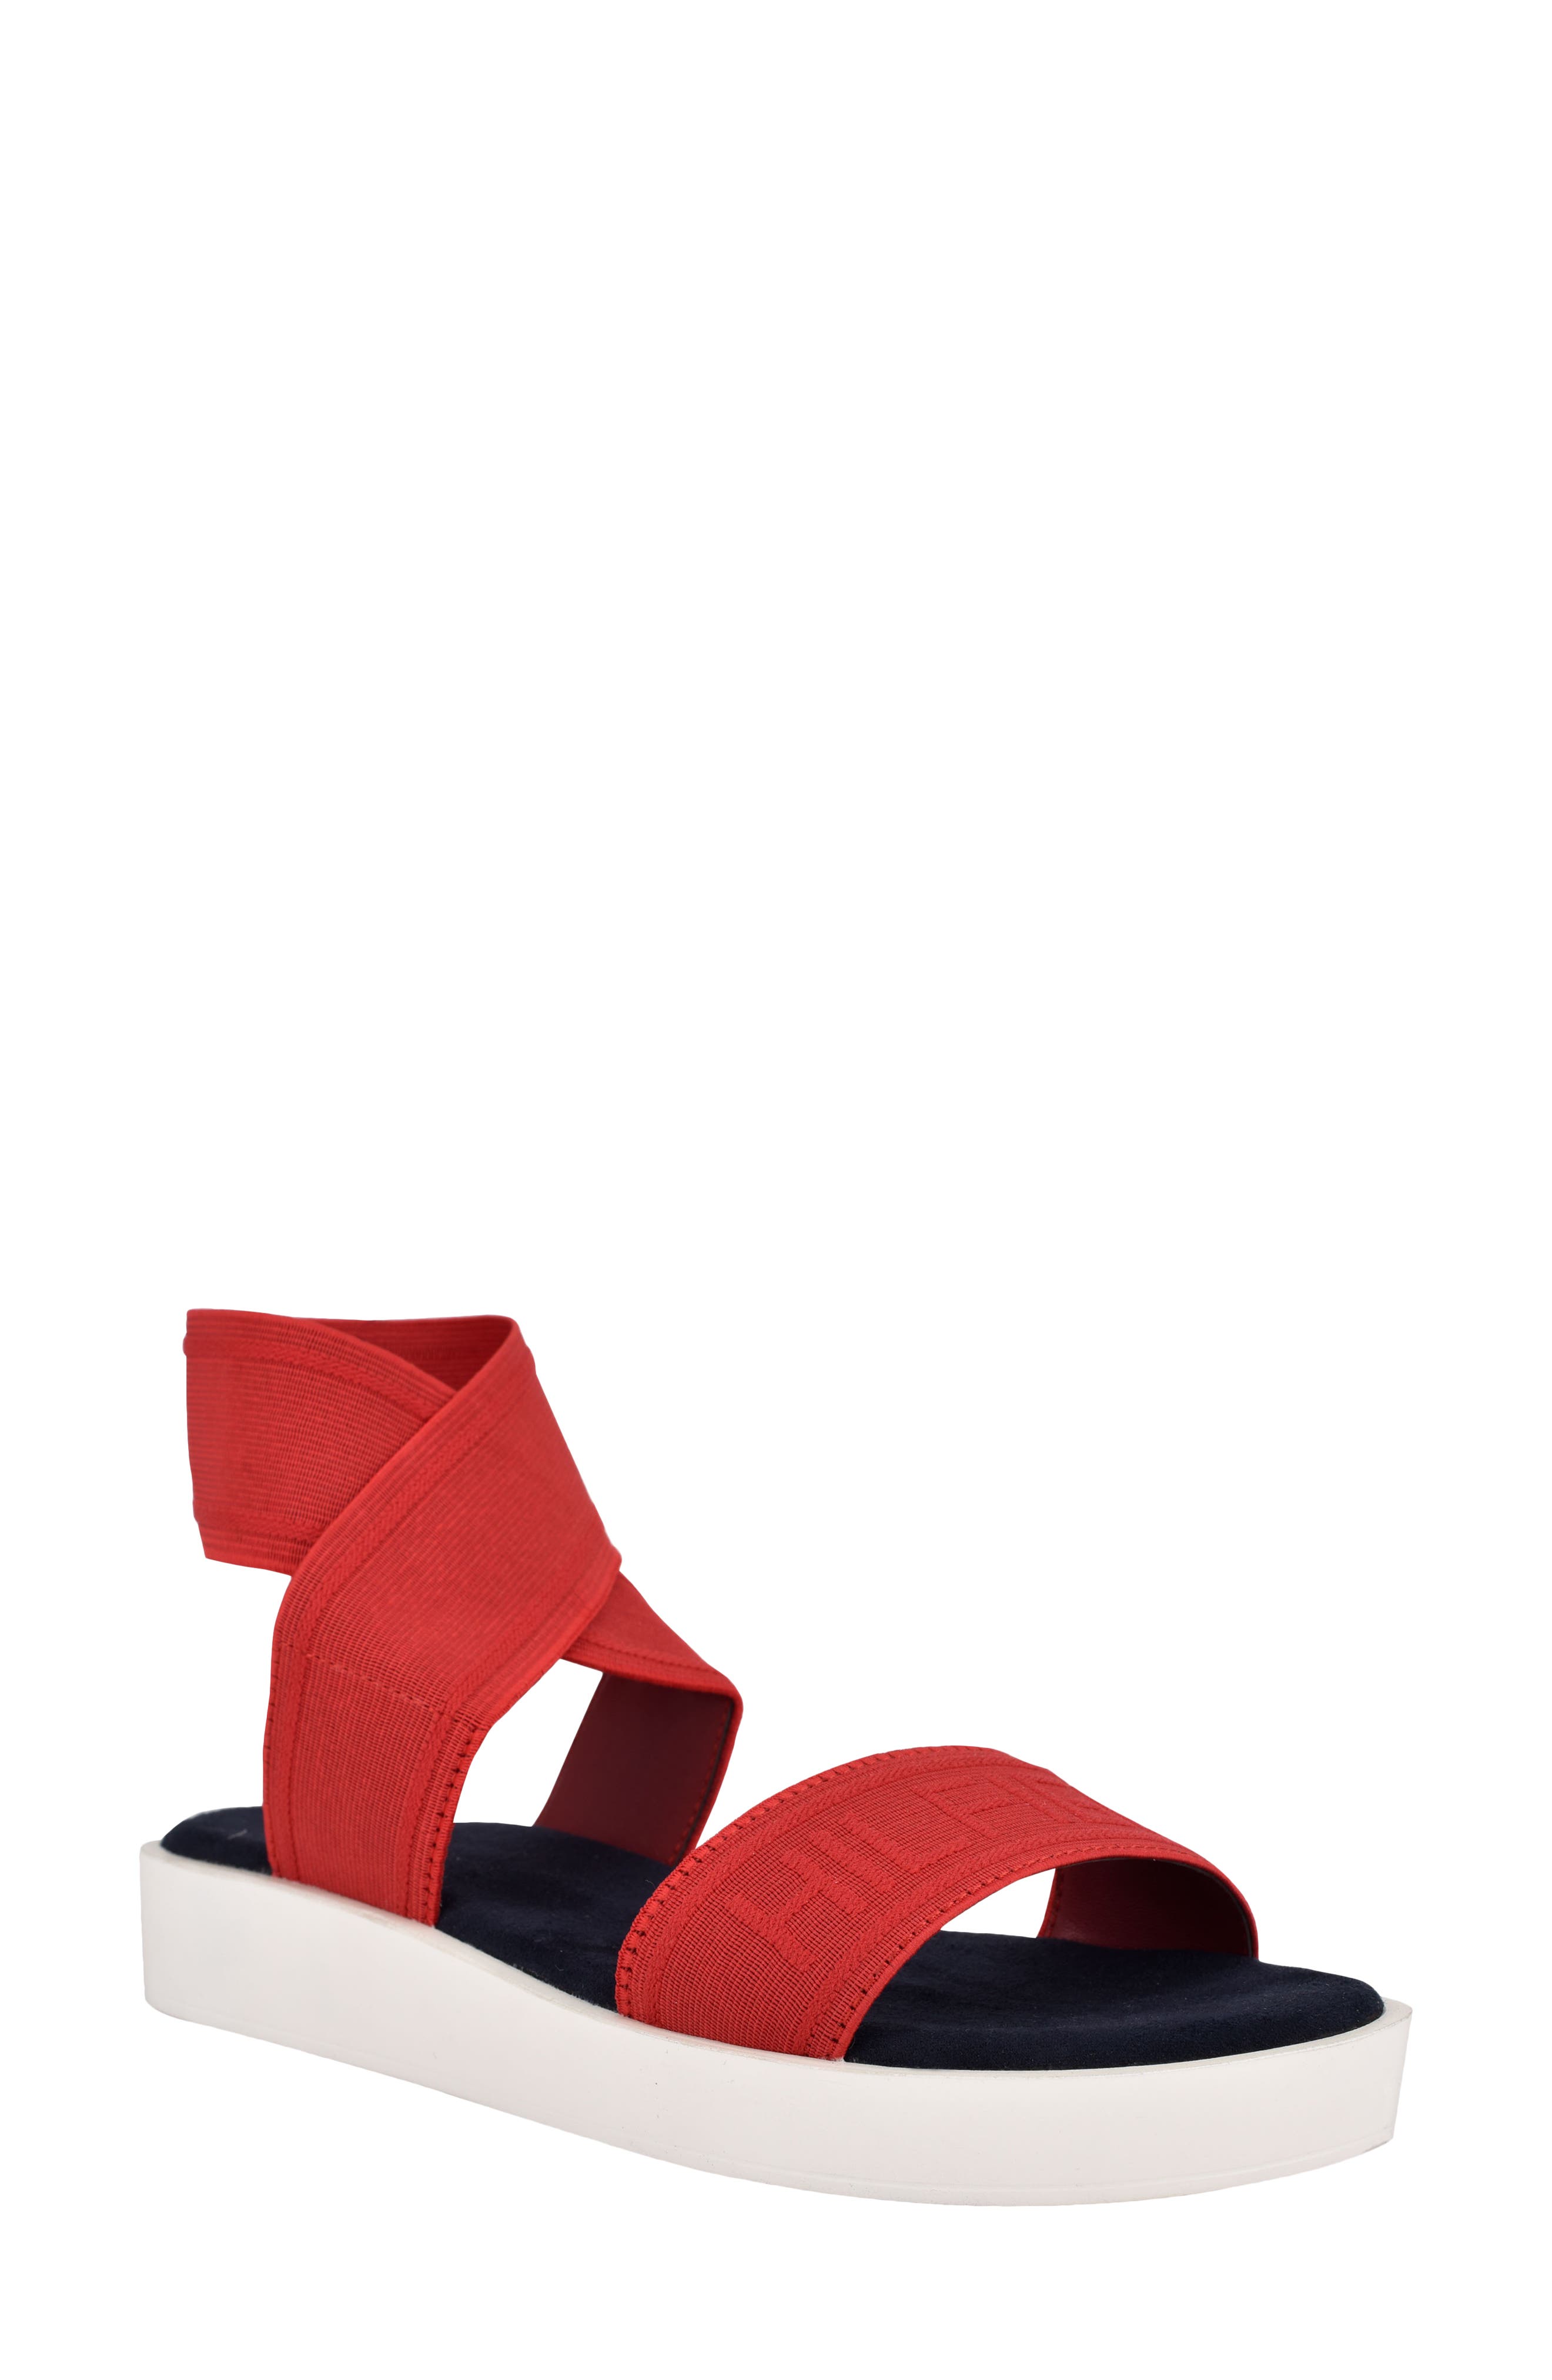 UPC 195182659440 product image for Women's Tommy Hilfiger Springi Ankle Strap Sandal, Size 6 M - Red | upcitemdb.com